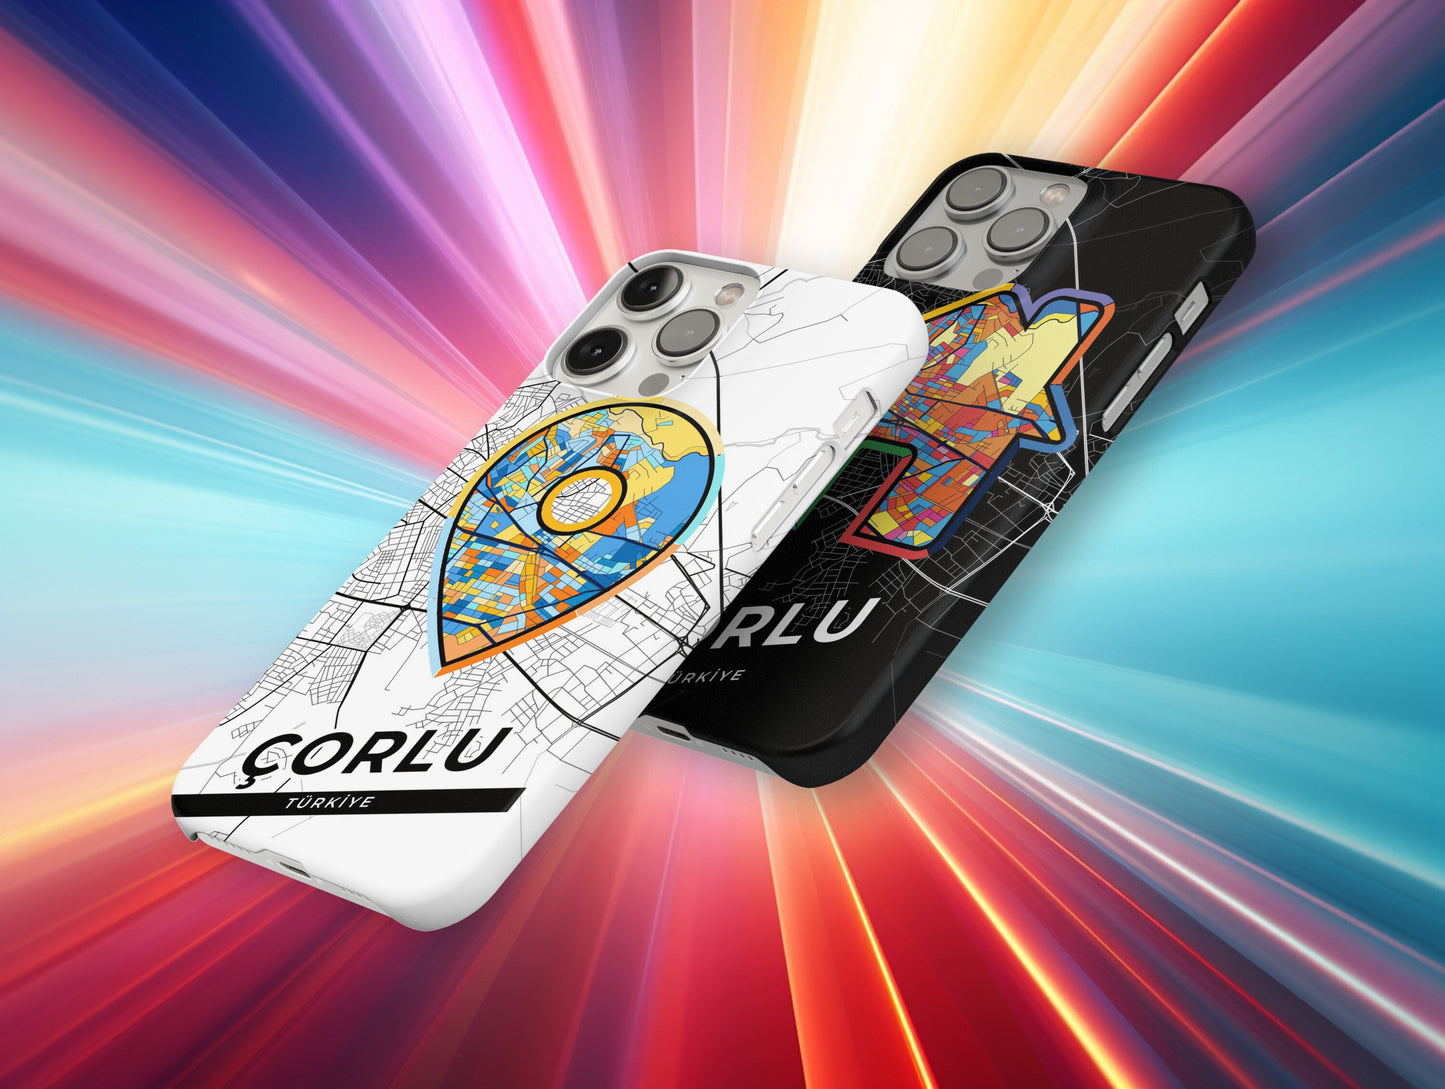 Çorlu Turkey slim phone case with colorful icon. Birthday, wedding or housewarming gift. Couple match cases.